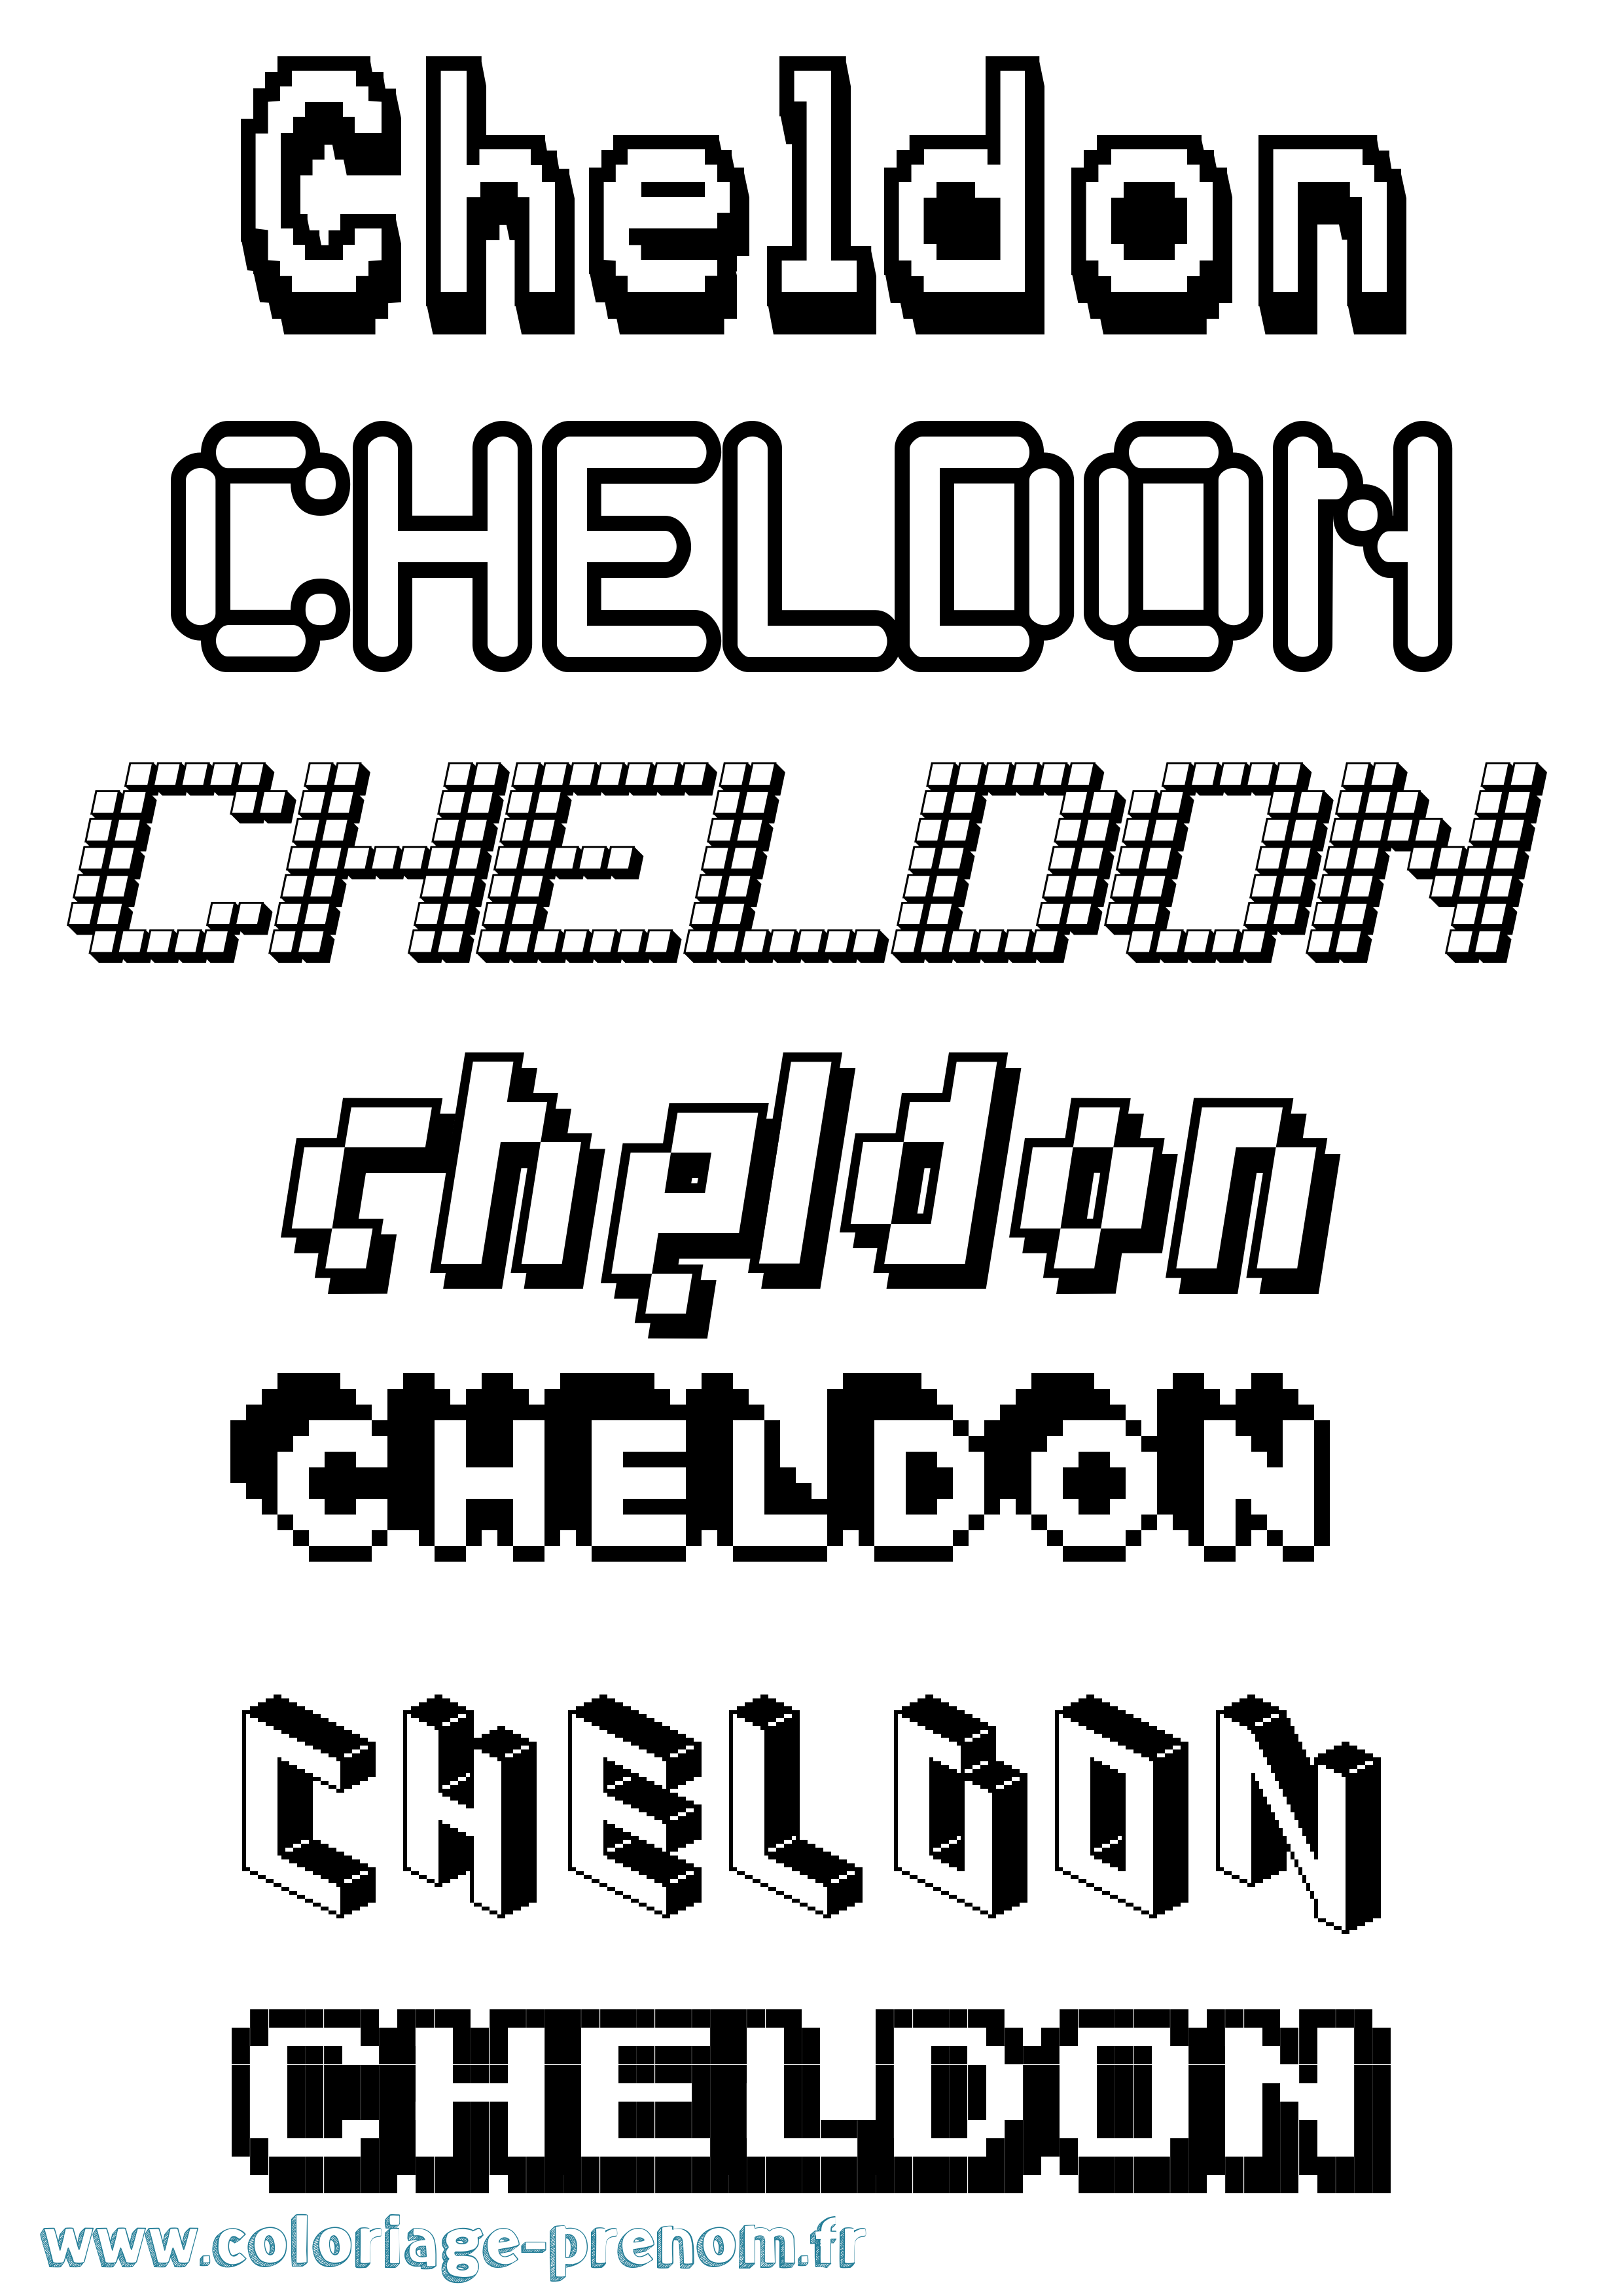 Coloriage prénom Cheldon Pixel